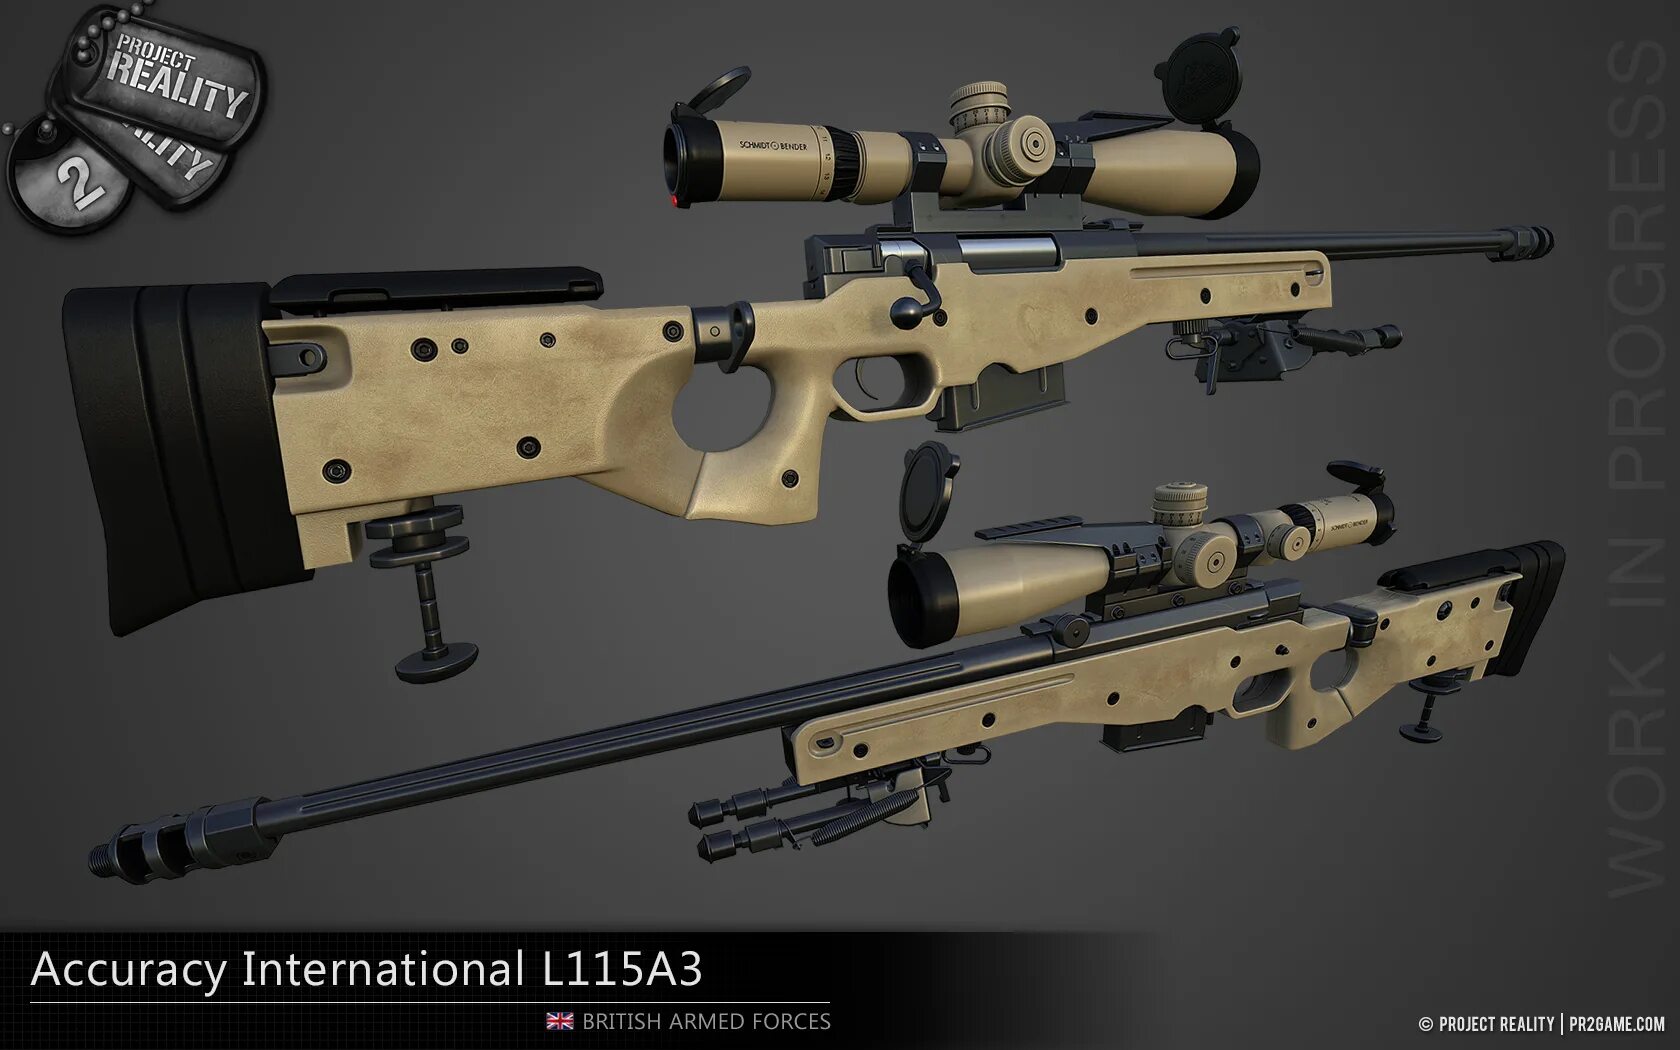 L115a3 AWM. Accuracy International l115a3. Снайперская винтовка l115a3 AWM. Accuracy International AWM l115a3.